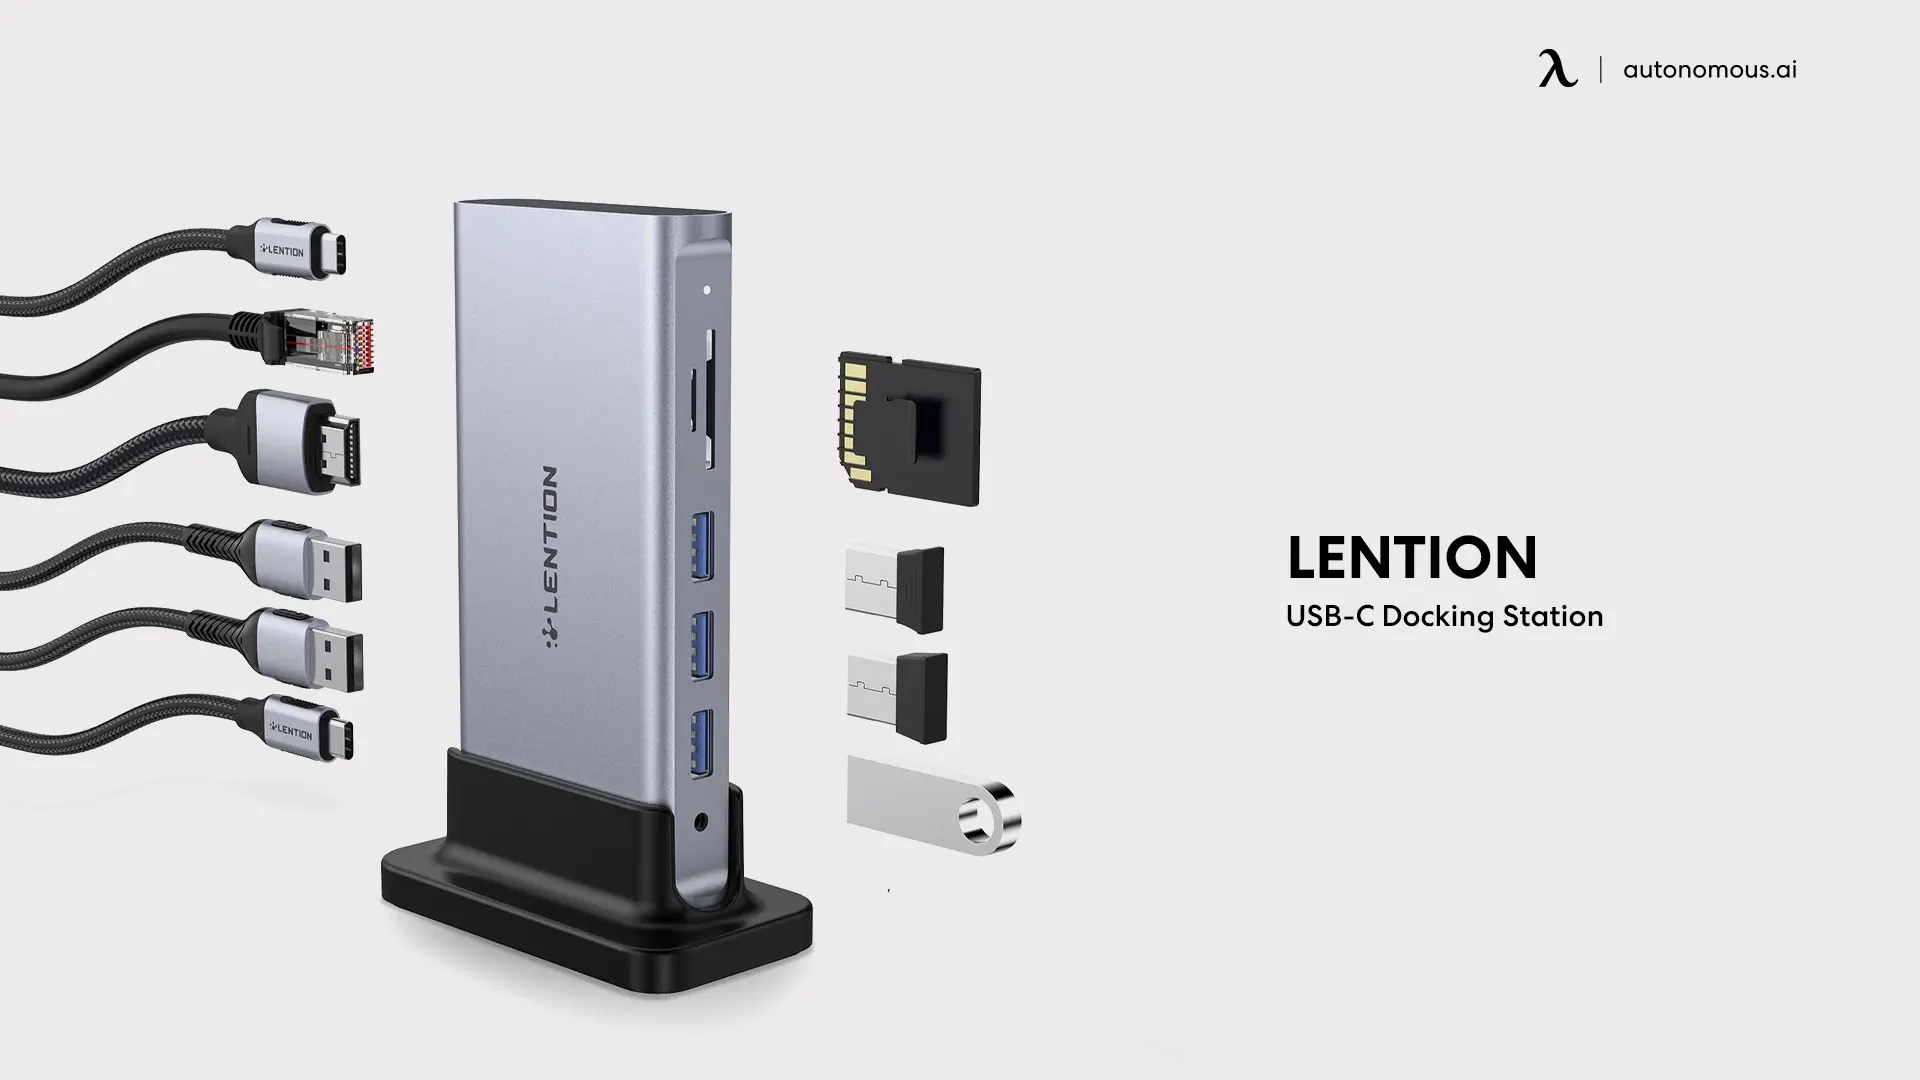 Lention USB-C Docking Station